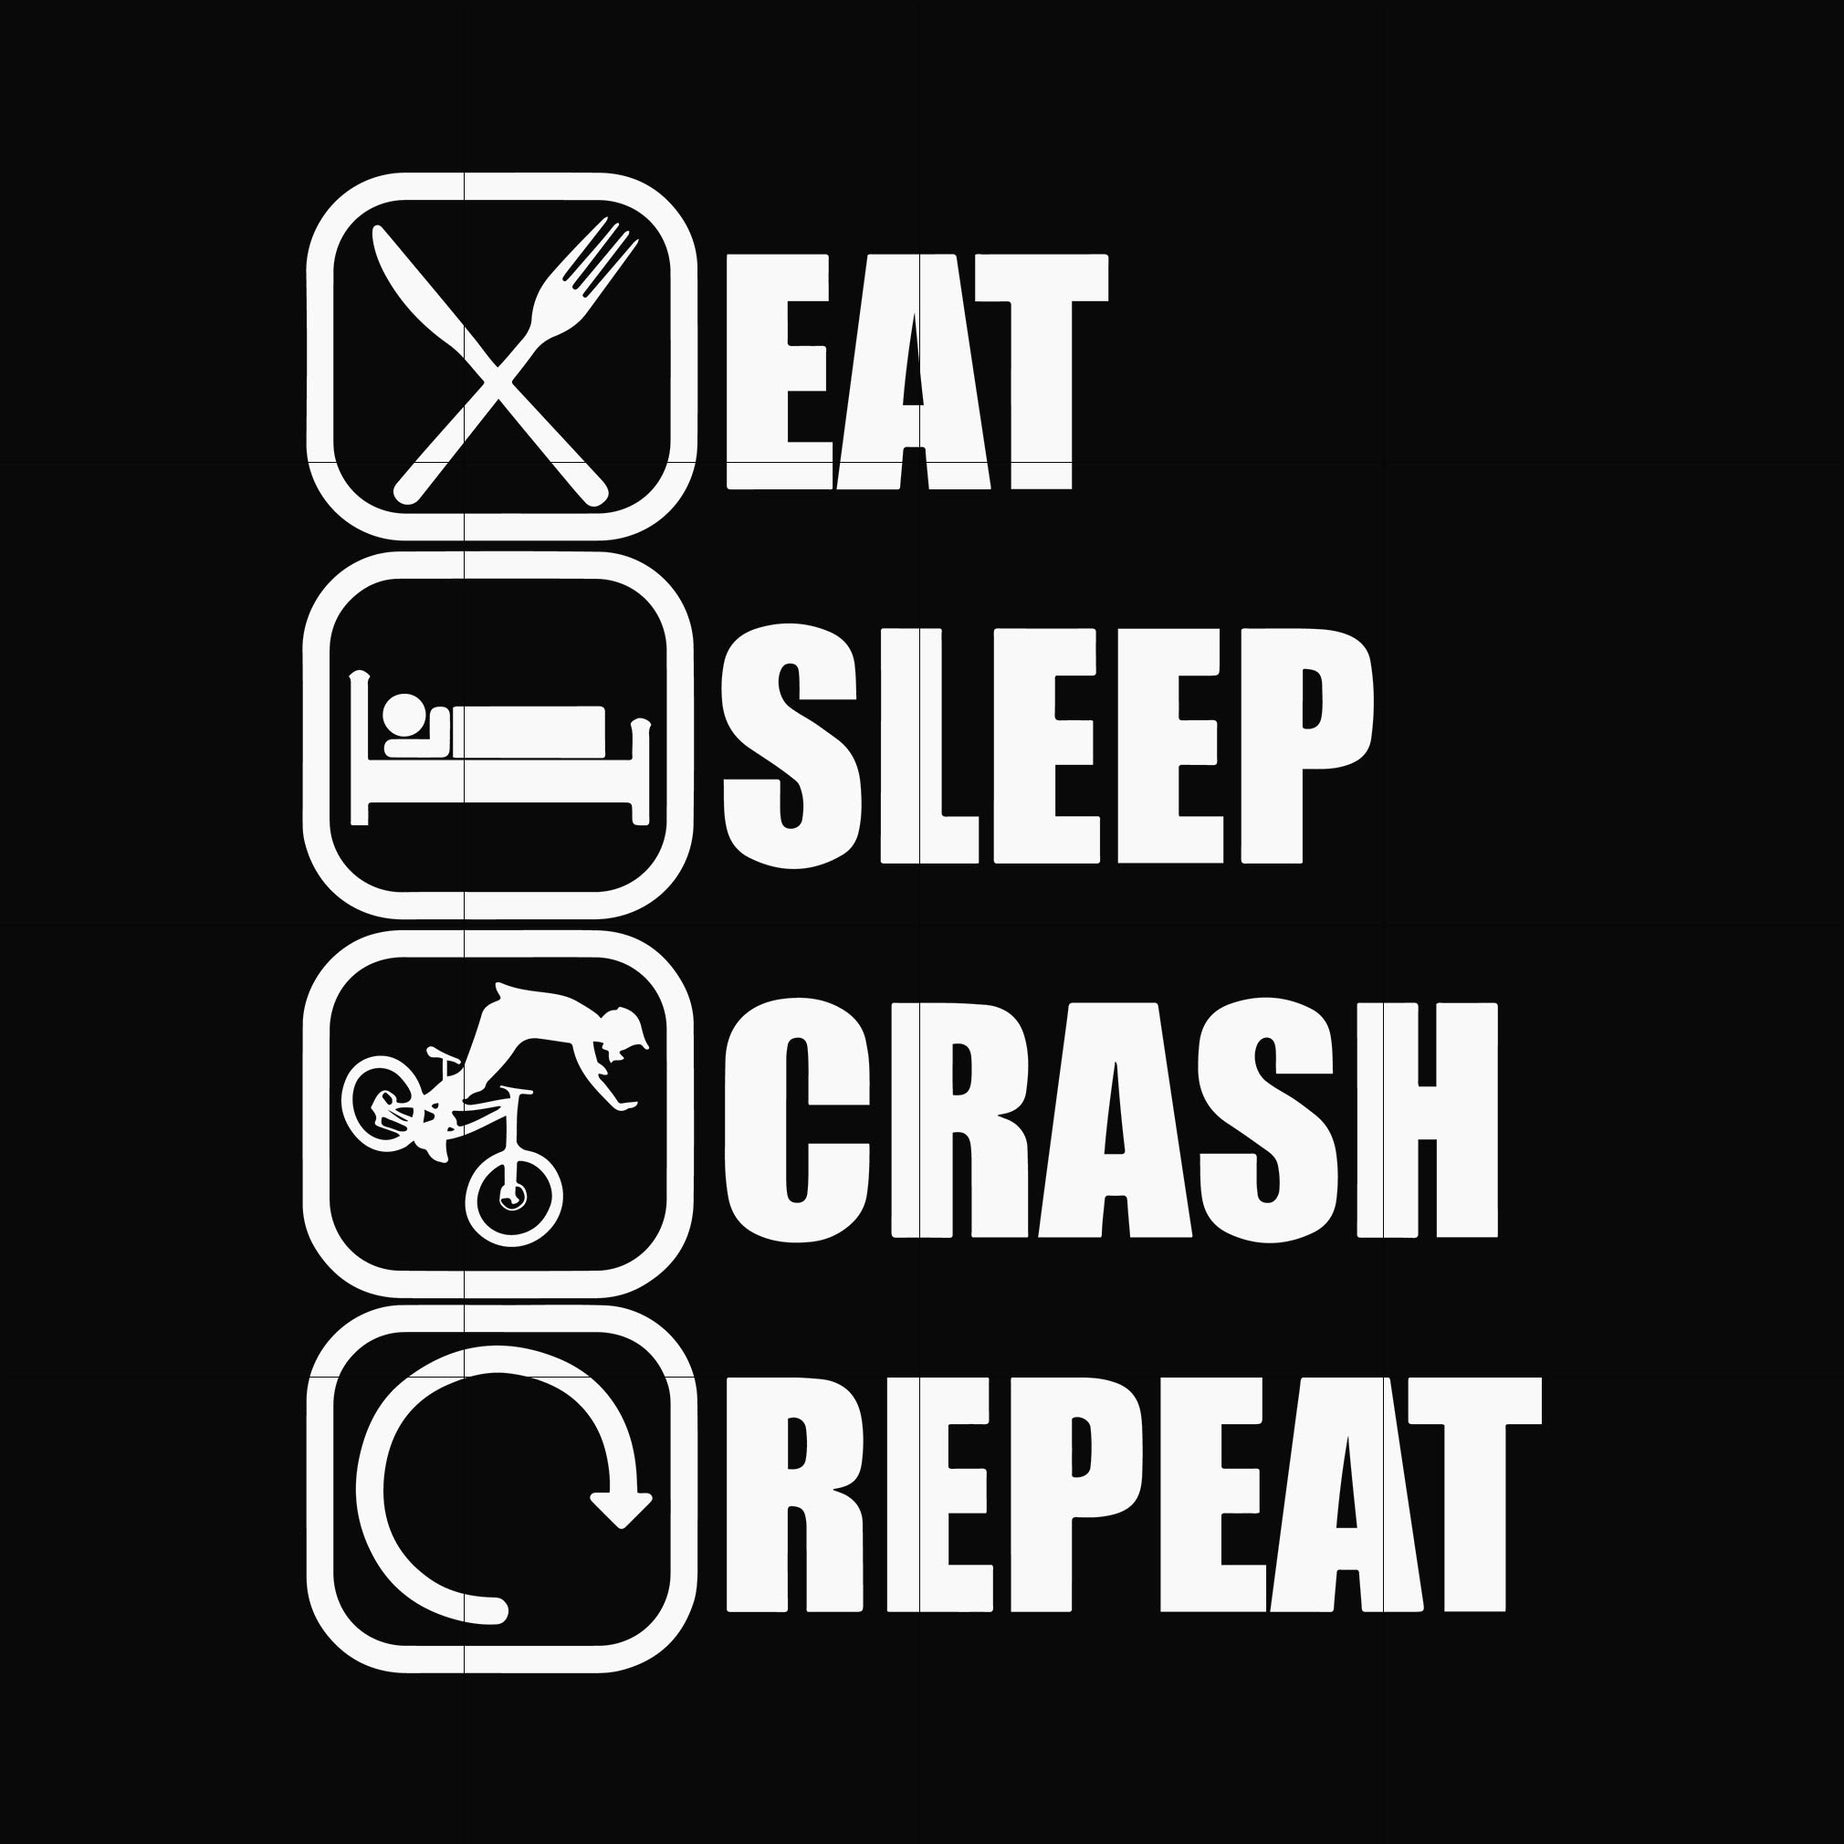 eat, sleep, crash, repeat svg, png, dxf, eps digital file OTH0016